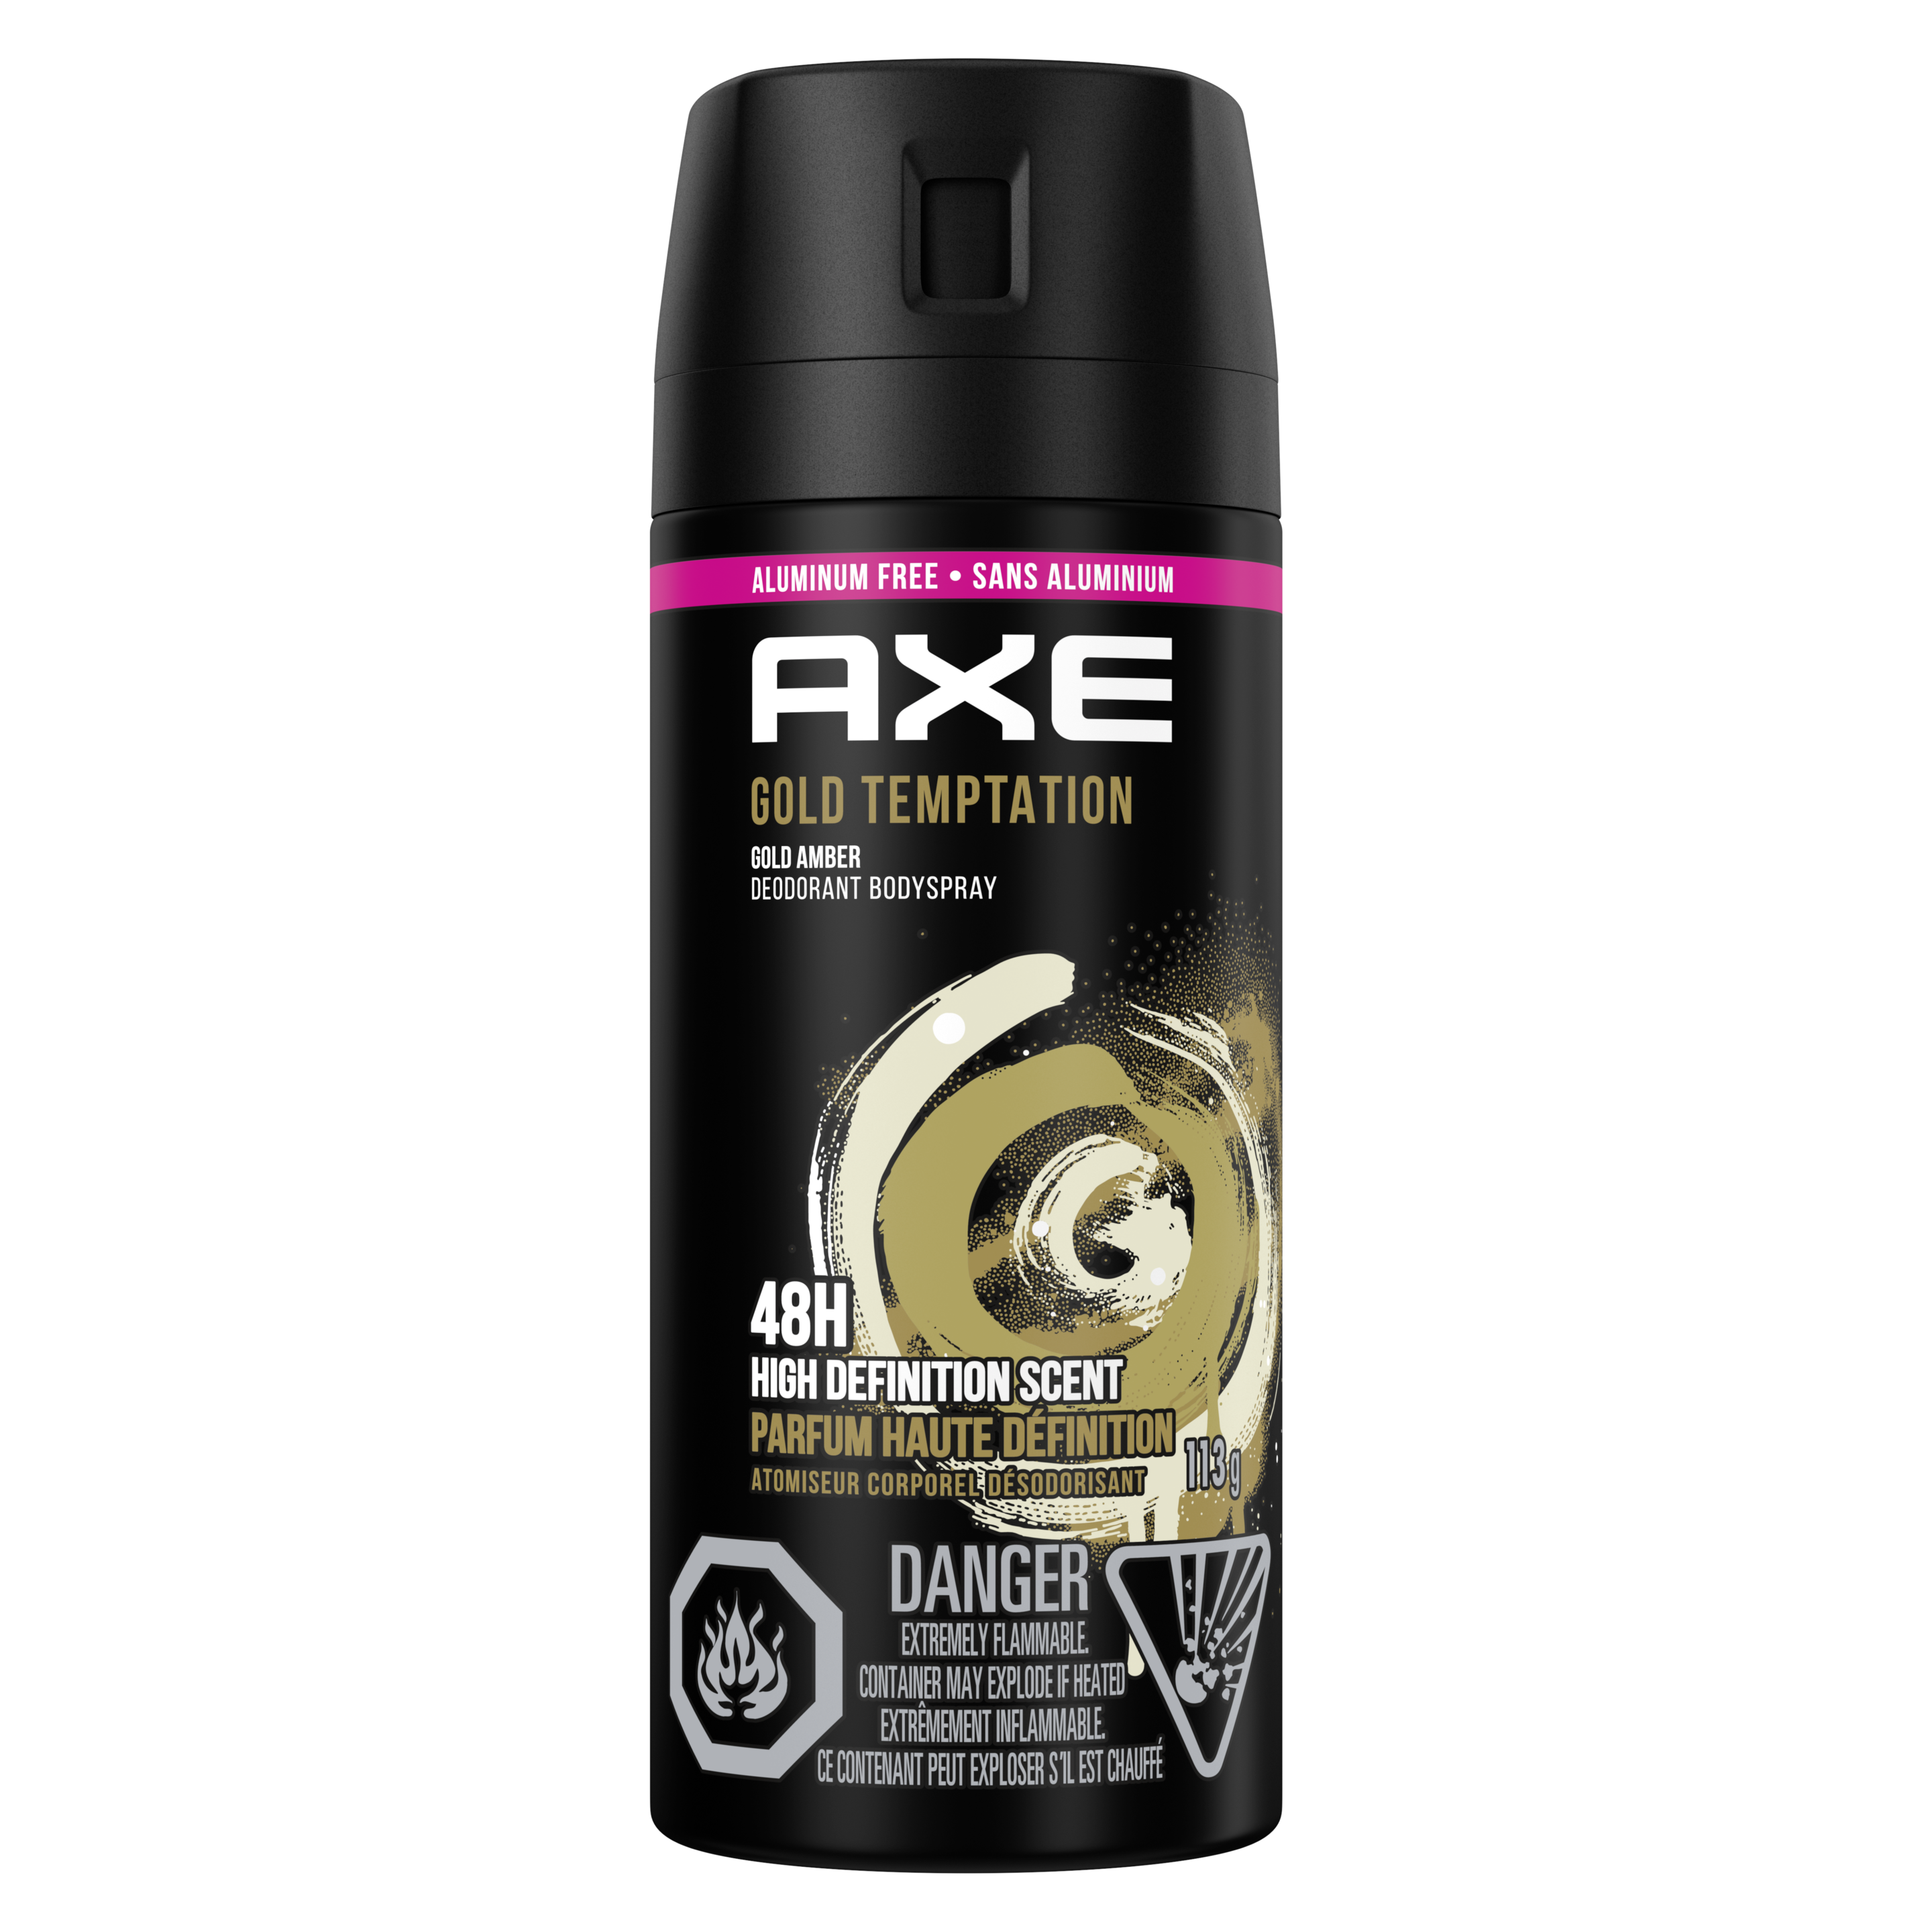 AXE Gold Temptation Deodorant Body Spray